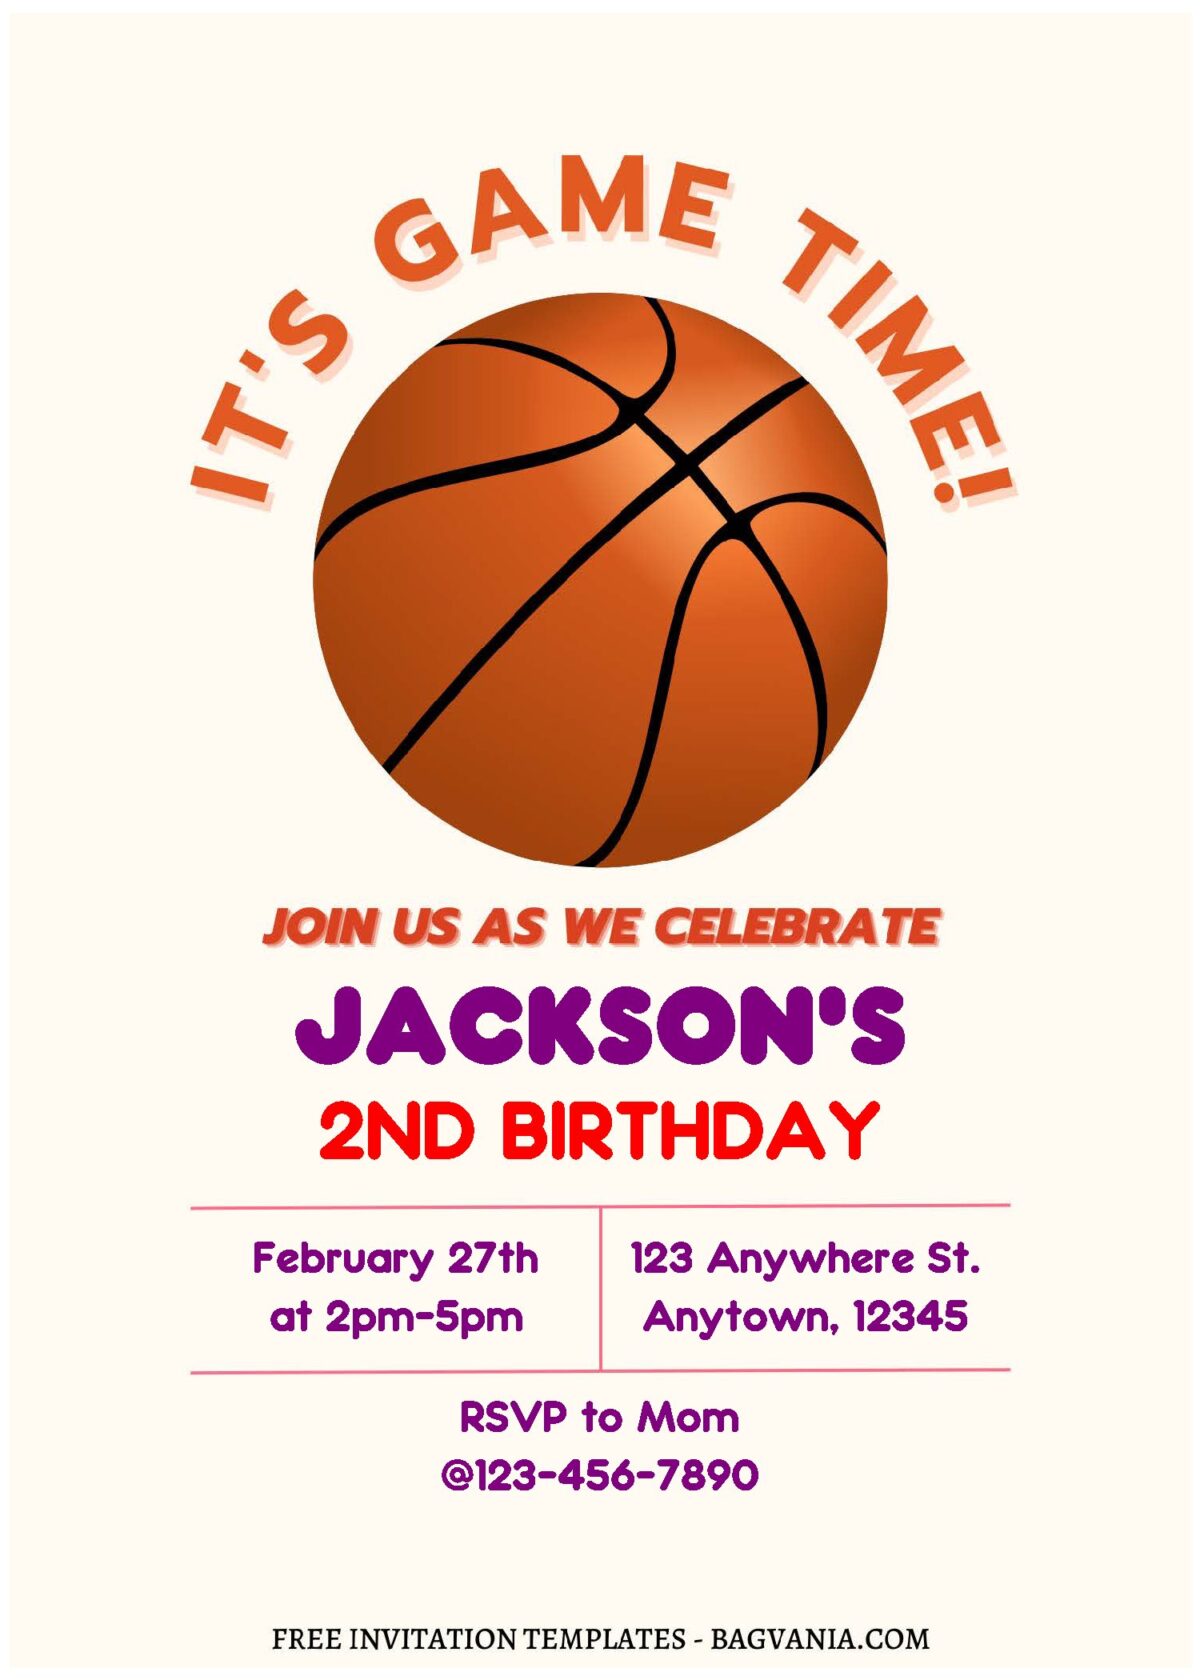 (Free Editable PDF) Game Time Basketball Birthday Invitation Templates C